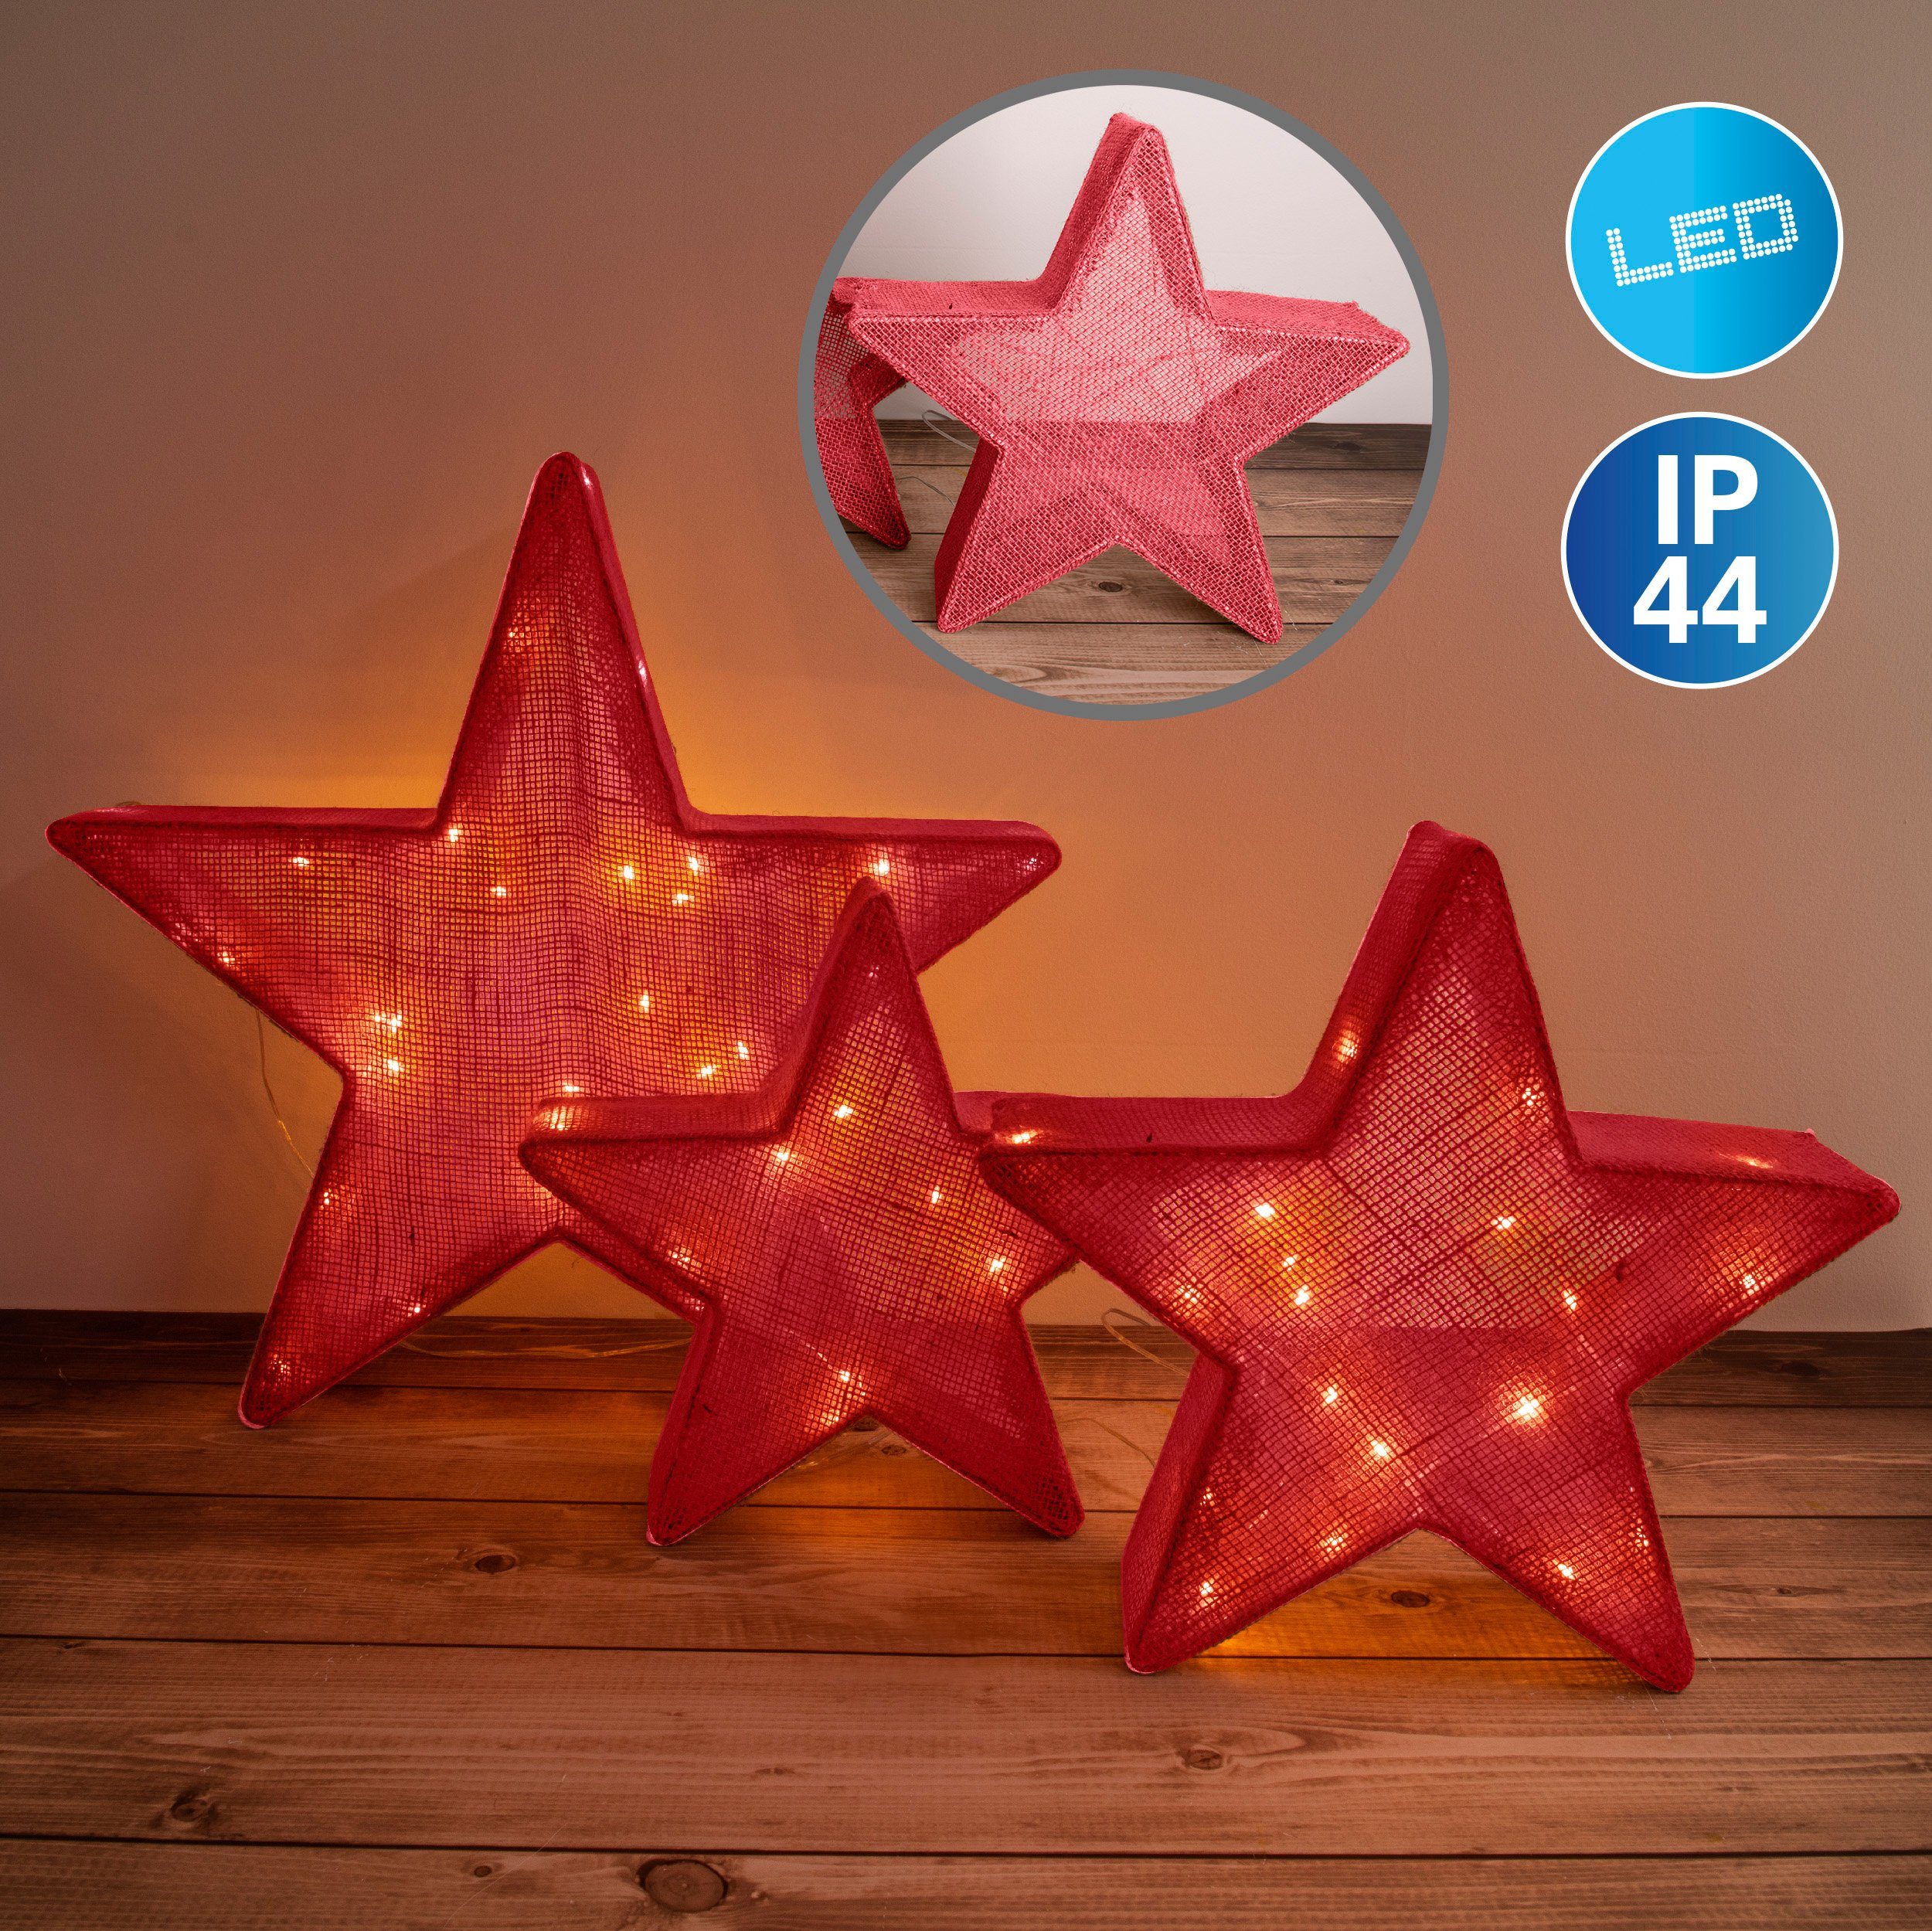 näve LED mit Adapter LED Stars<<, rot,1x Stars, Christmas Zuleitung 4,5V/3.6W Warmweiß, LED Stern 3er Set>>Christmas fest integriert